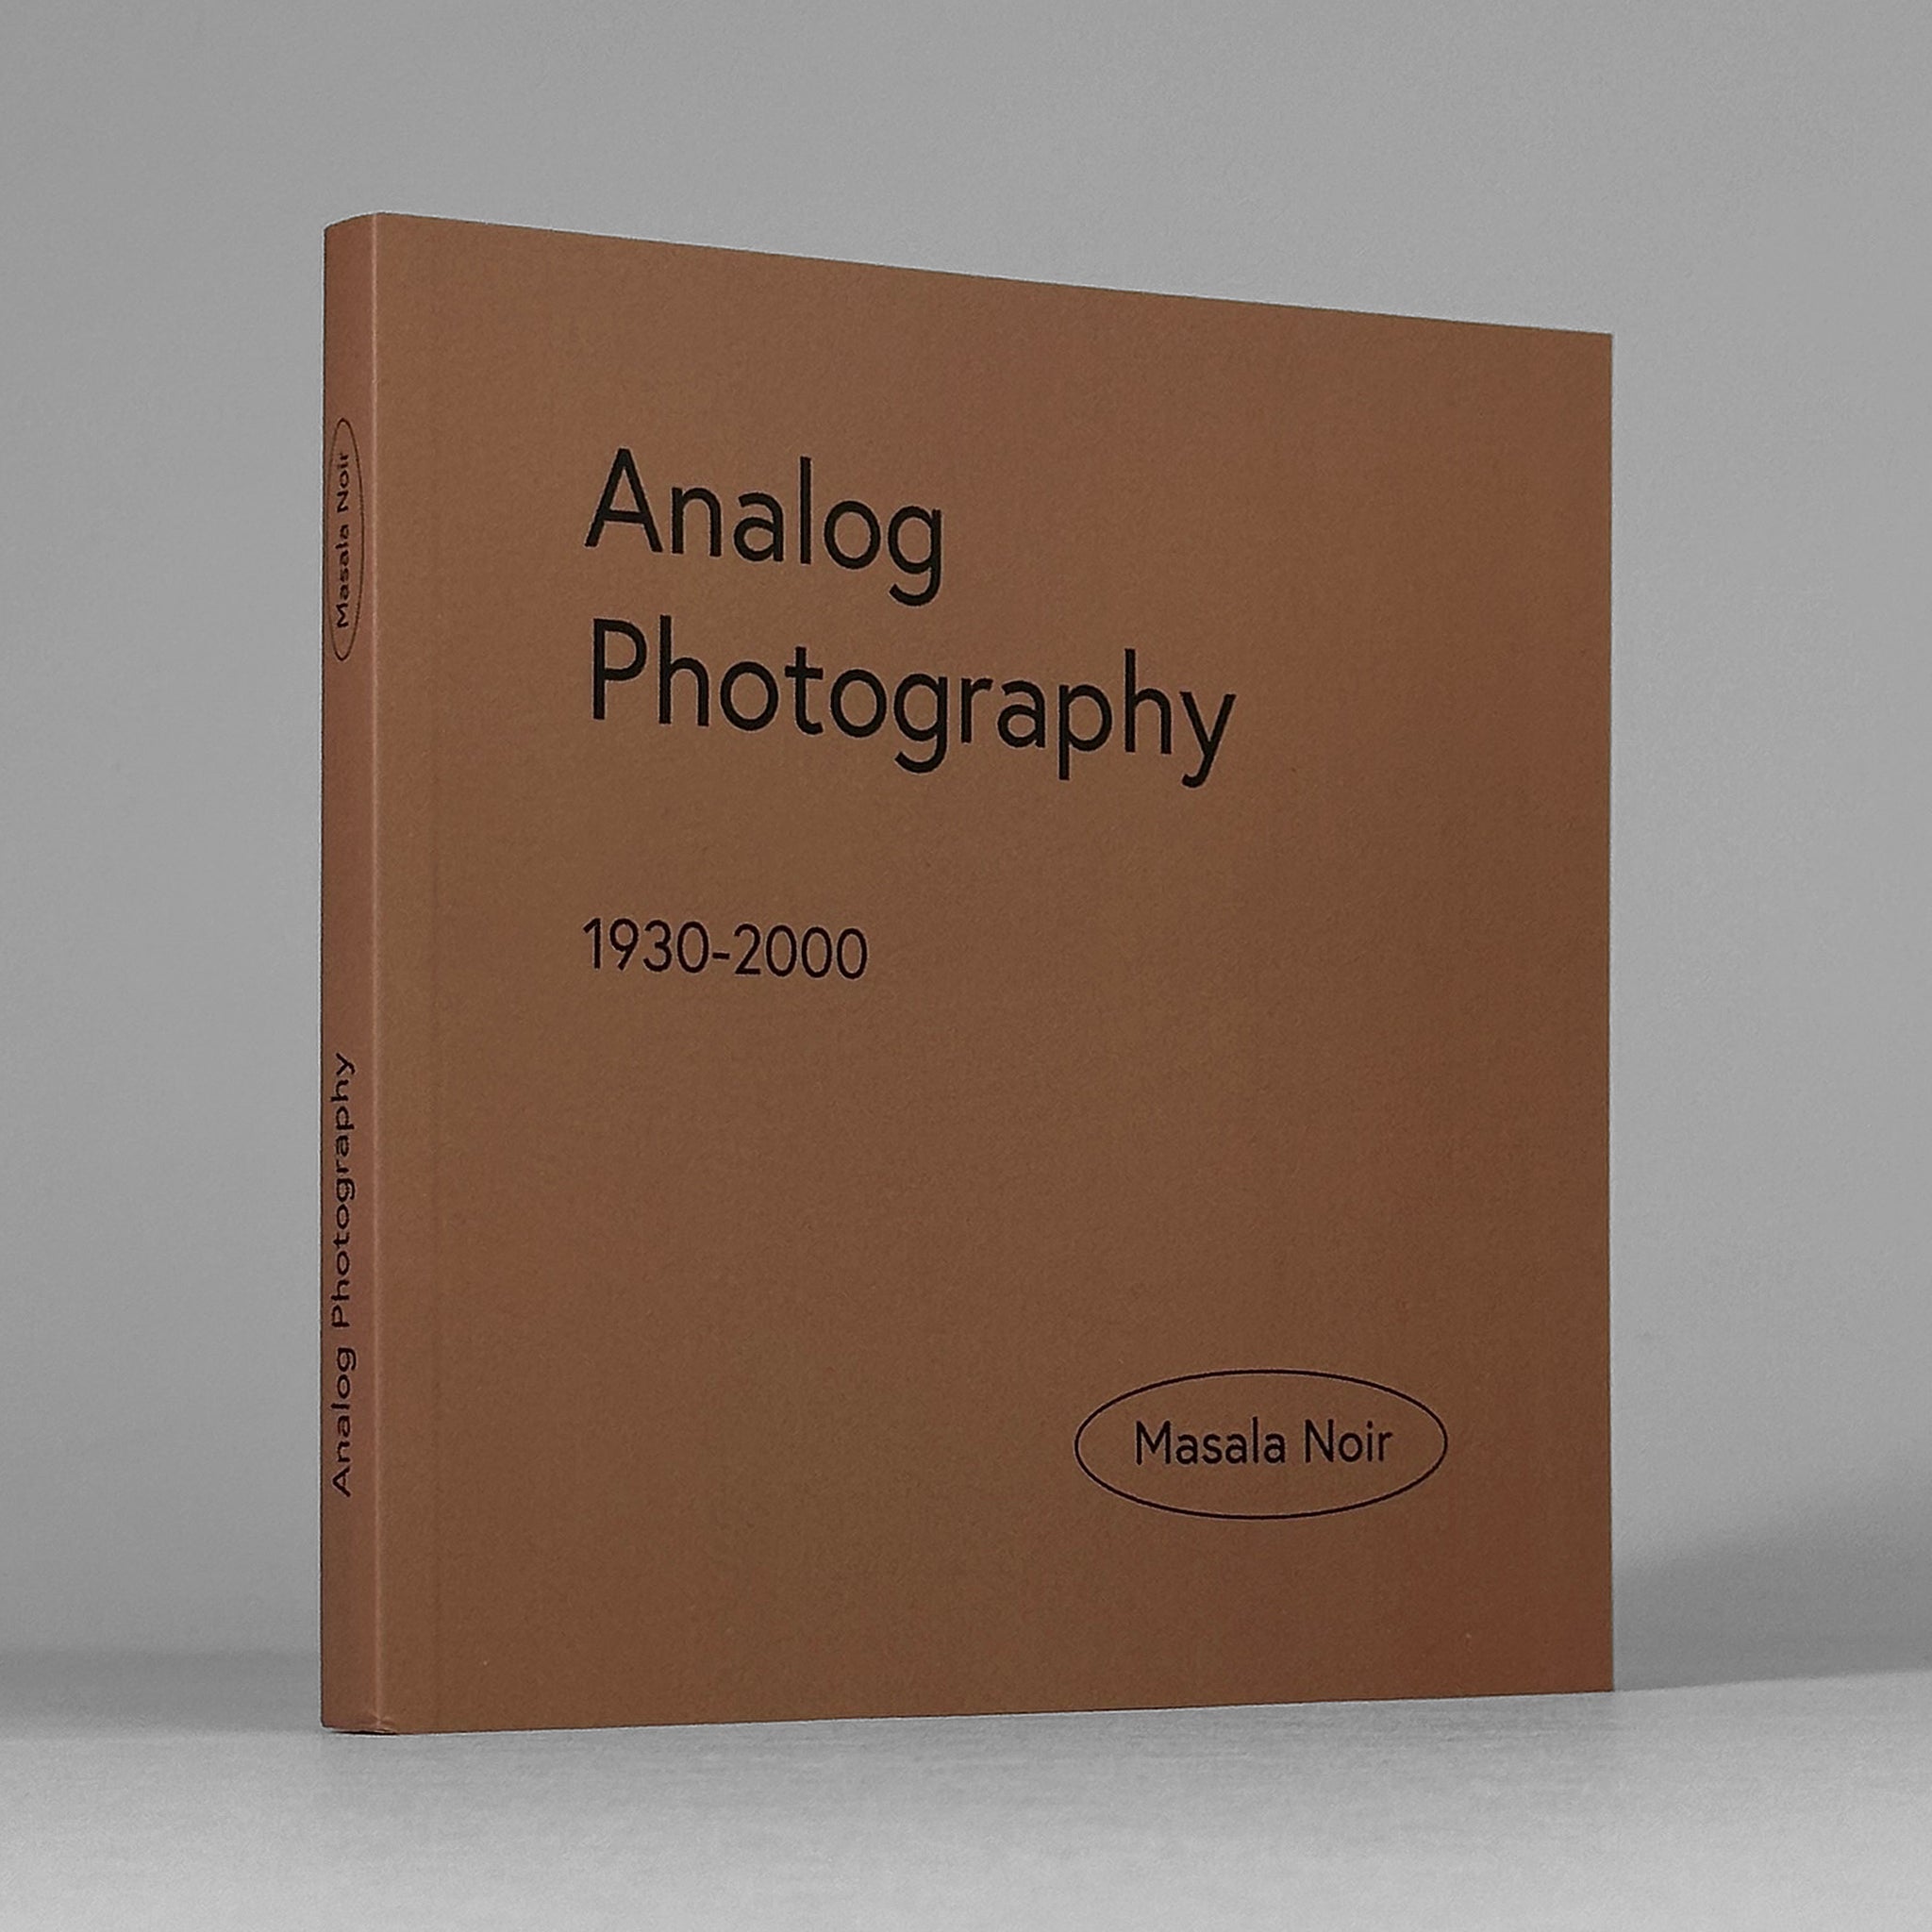 Analog Photography, 1930-2000